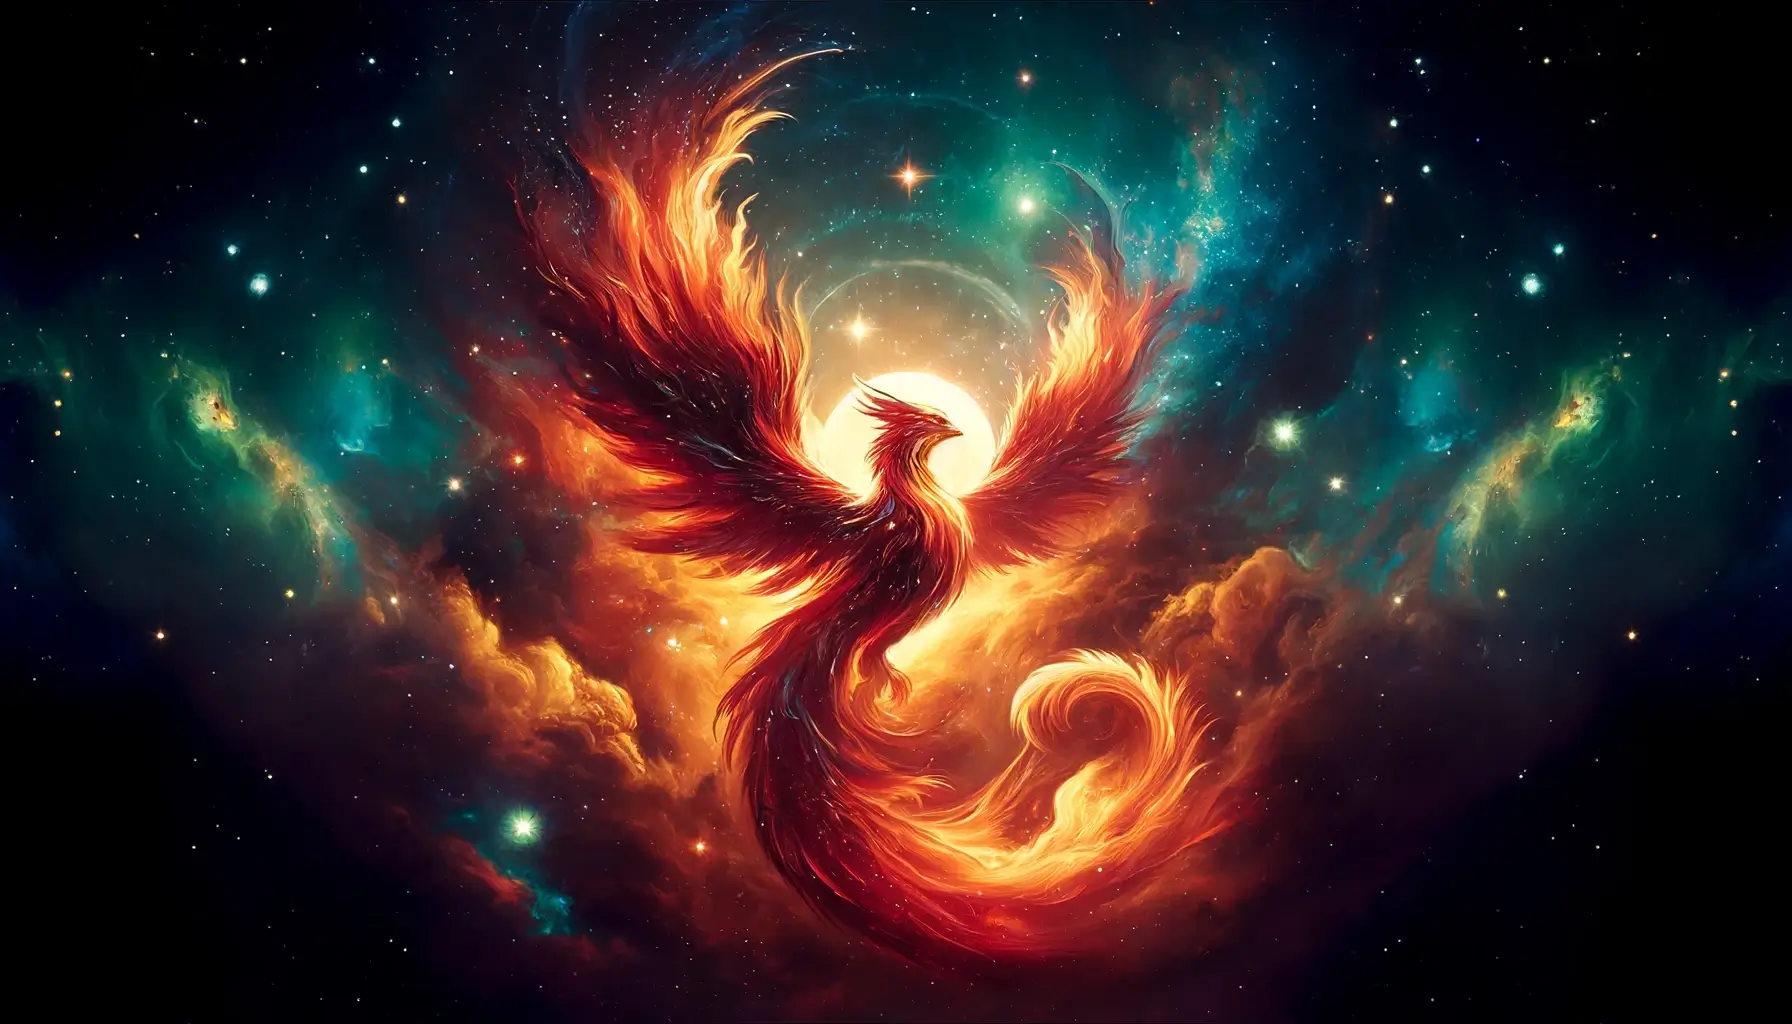 SaaS phoenix represent rebirth and pivot in business.